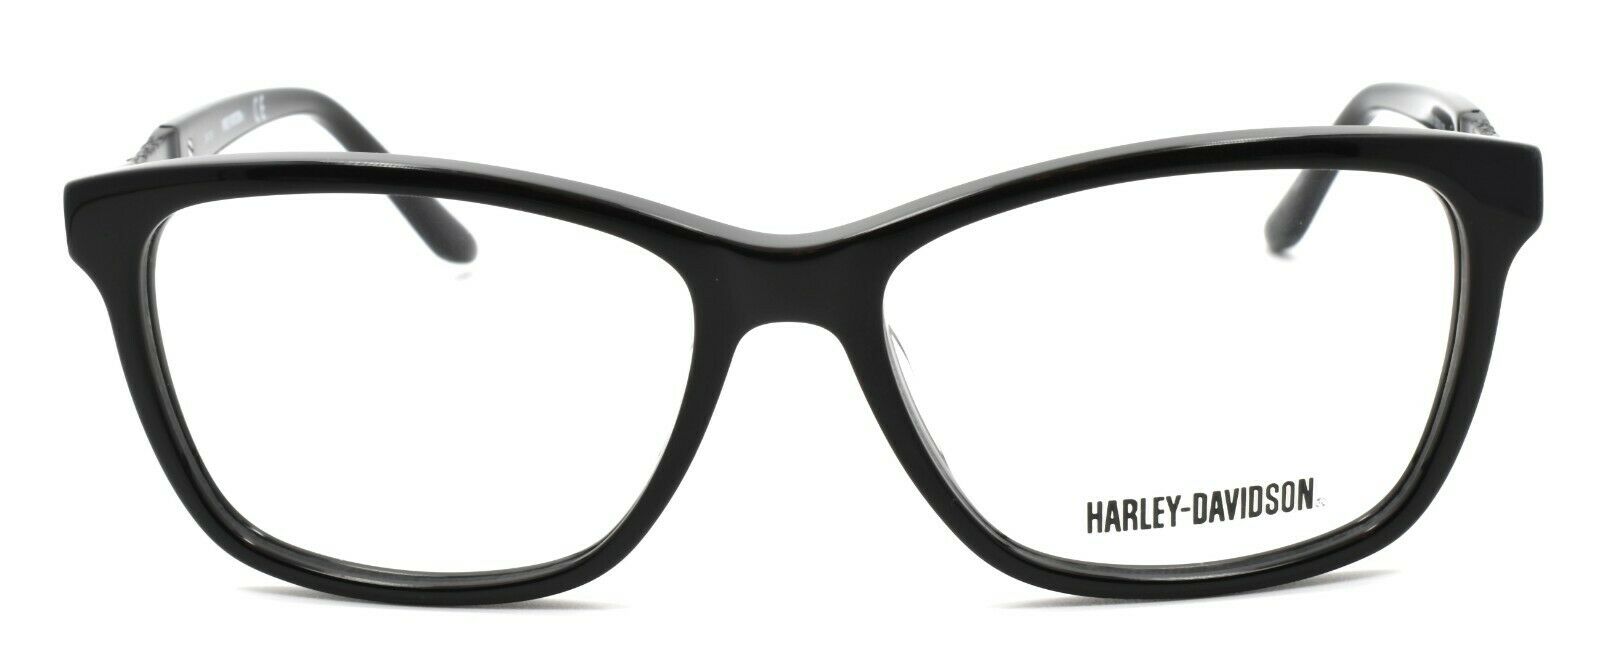 2-Harley Davidson HD0542 001 Women's Eyeglasses Frames 53-15-135 Black + CASE-664689925131-IKSpecs